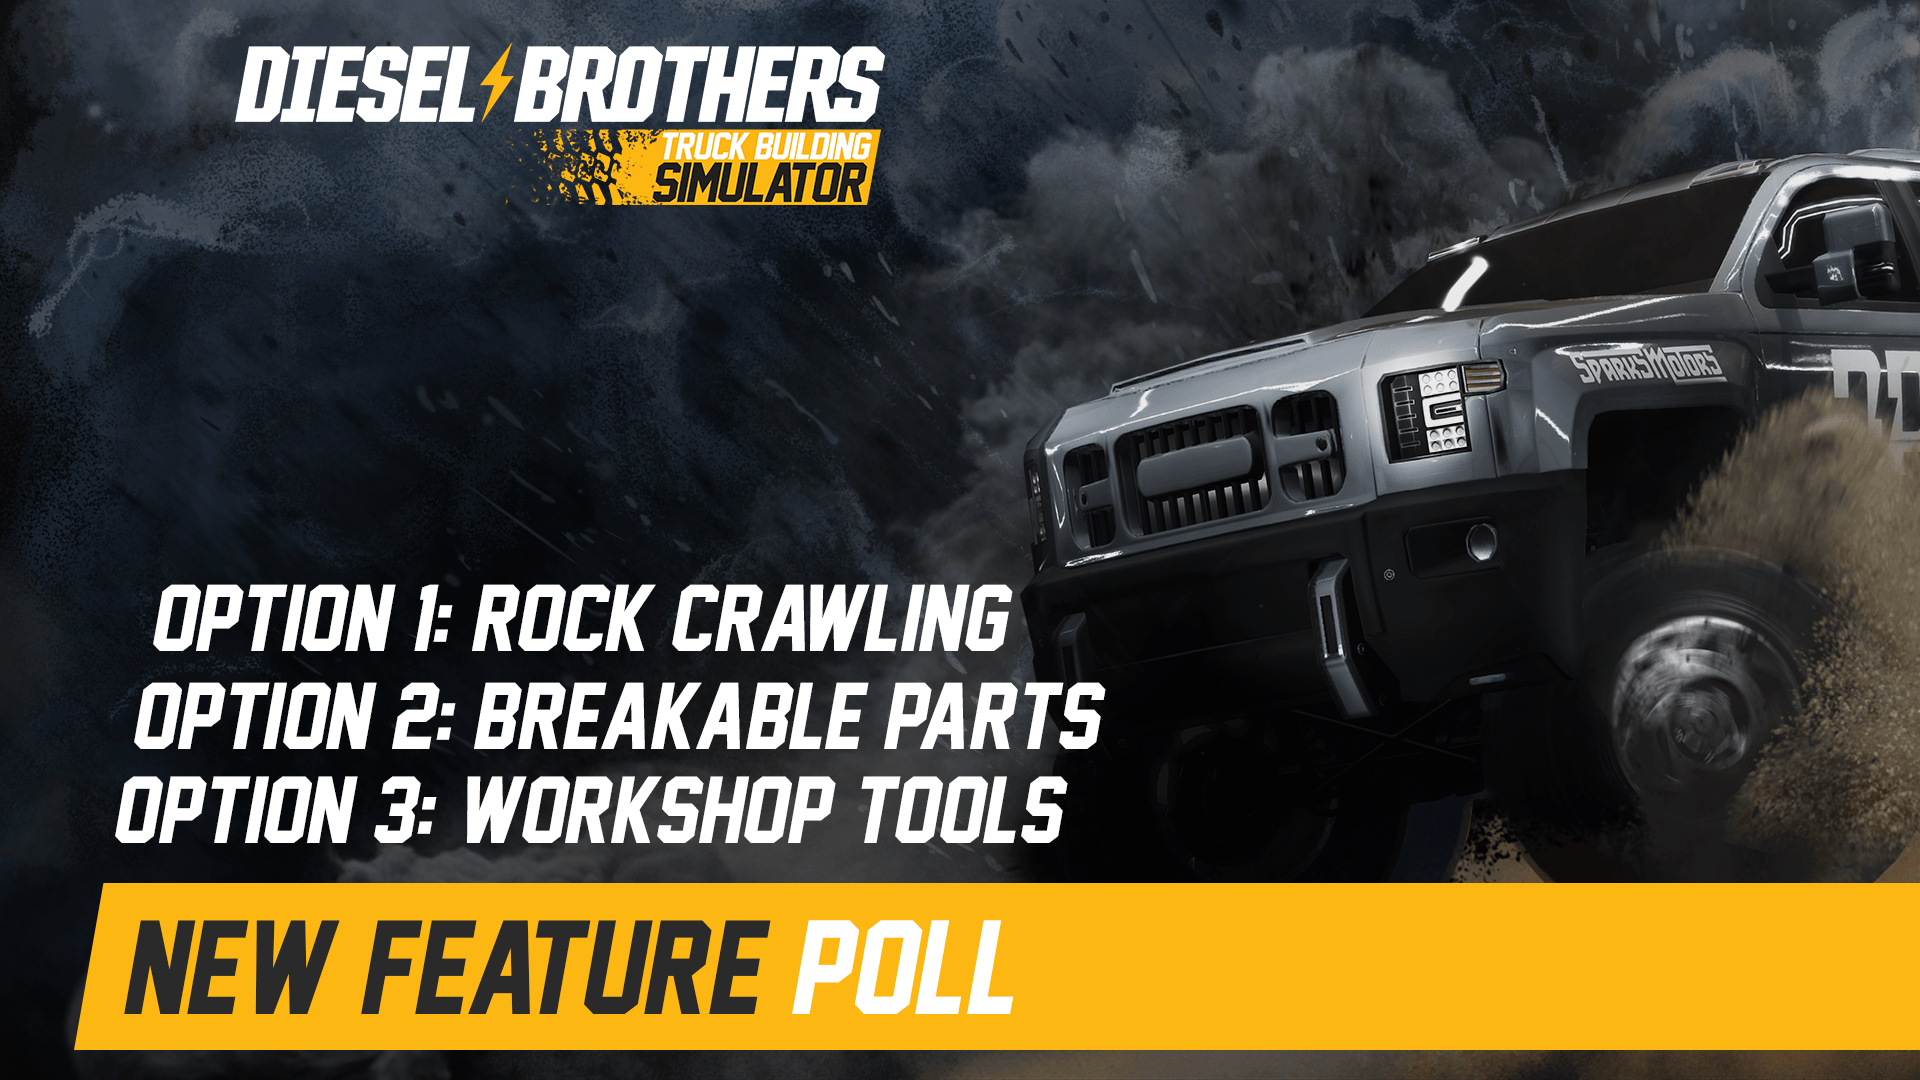 Diesel Brothers: Truck Building Simulator - Help us choose the next